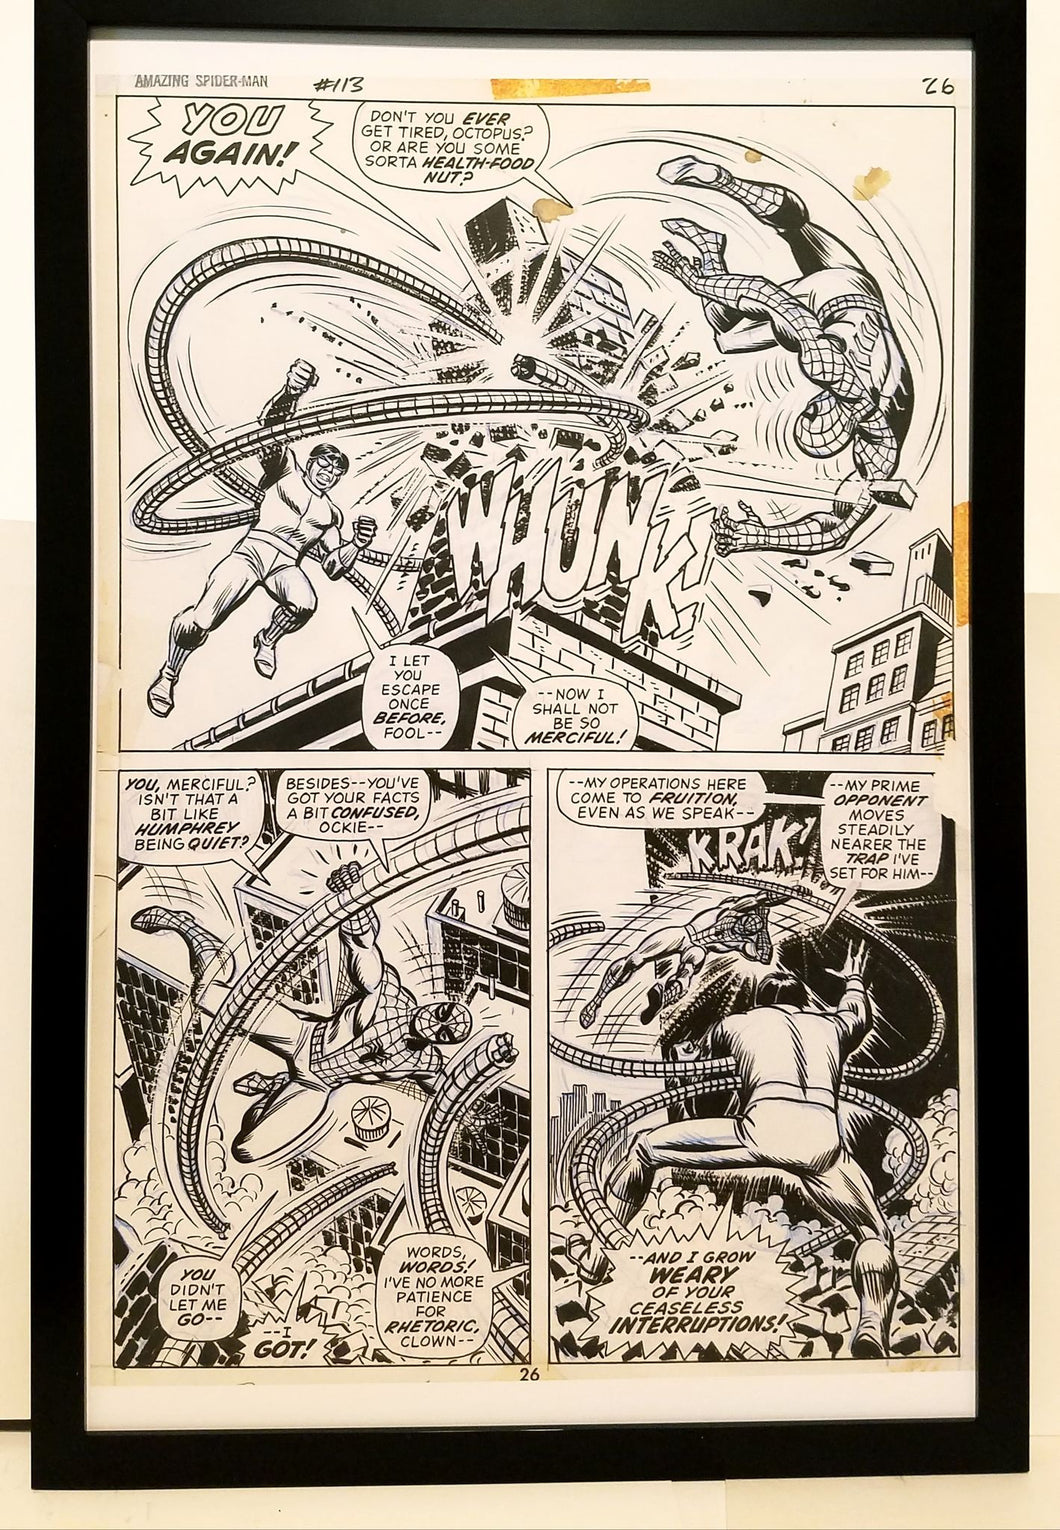 Amazing Spider-Man #113 pg. 26 11x17 FRAMED Original Art Poster Marvel Comics